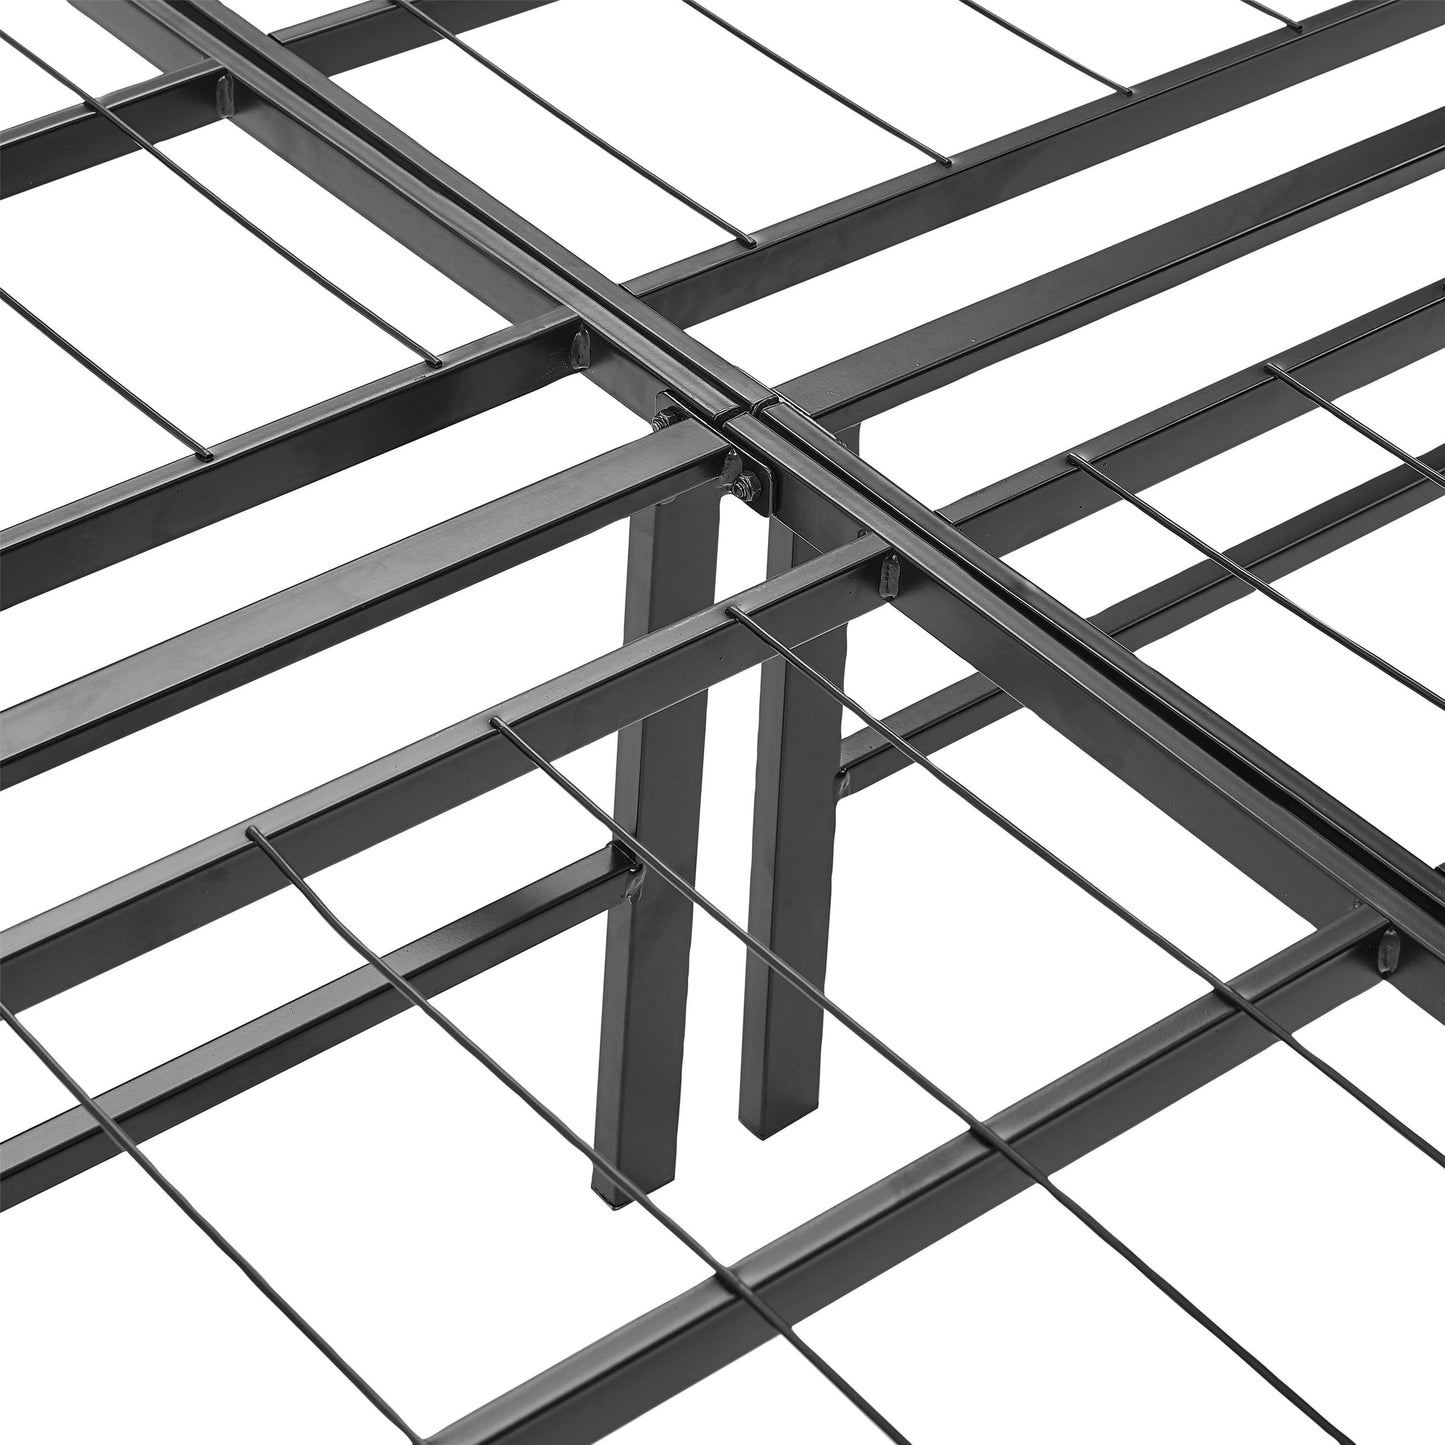 Mainstays 14" High Profile Foldable Steel Full Platform Bed Frame, Bla   Lastricks.